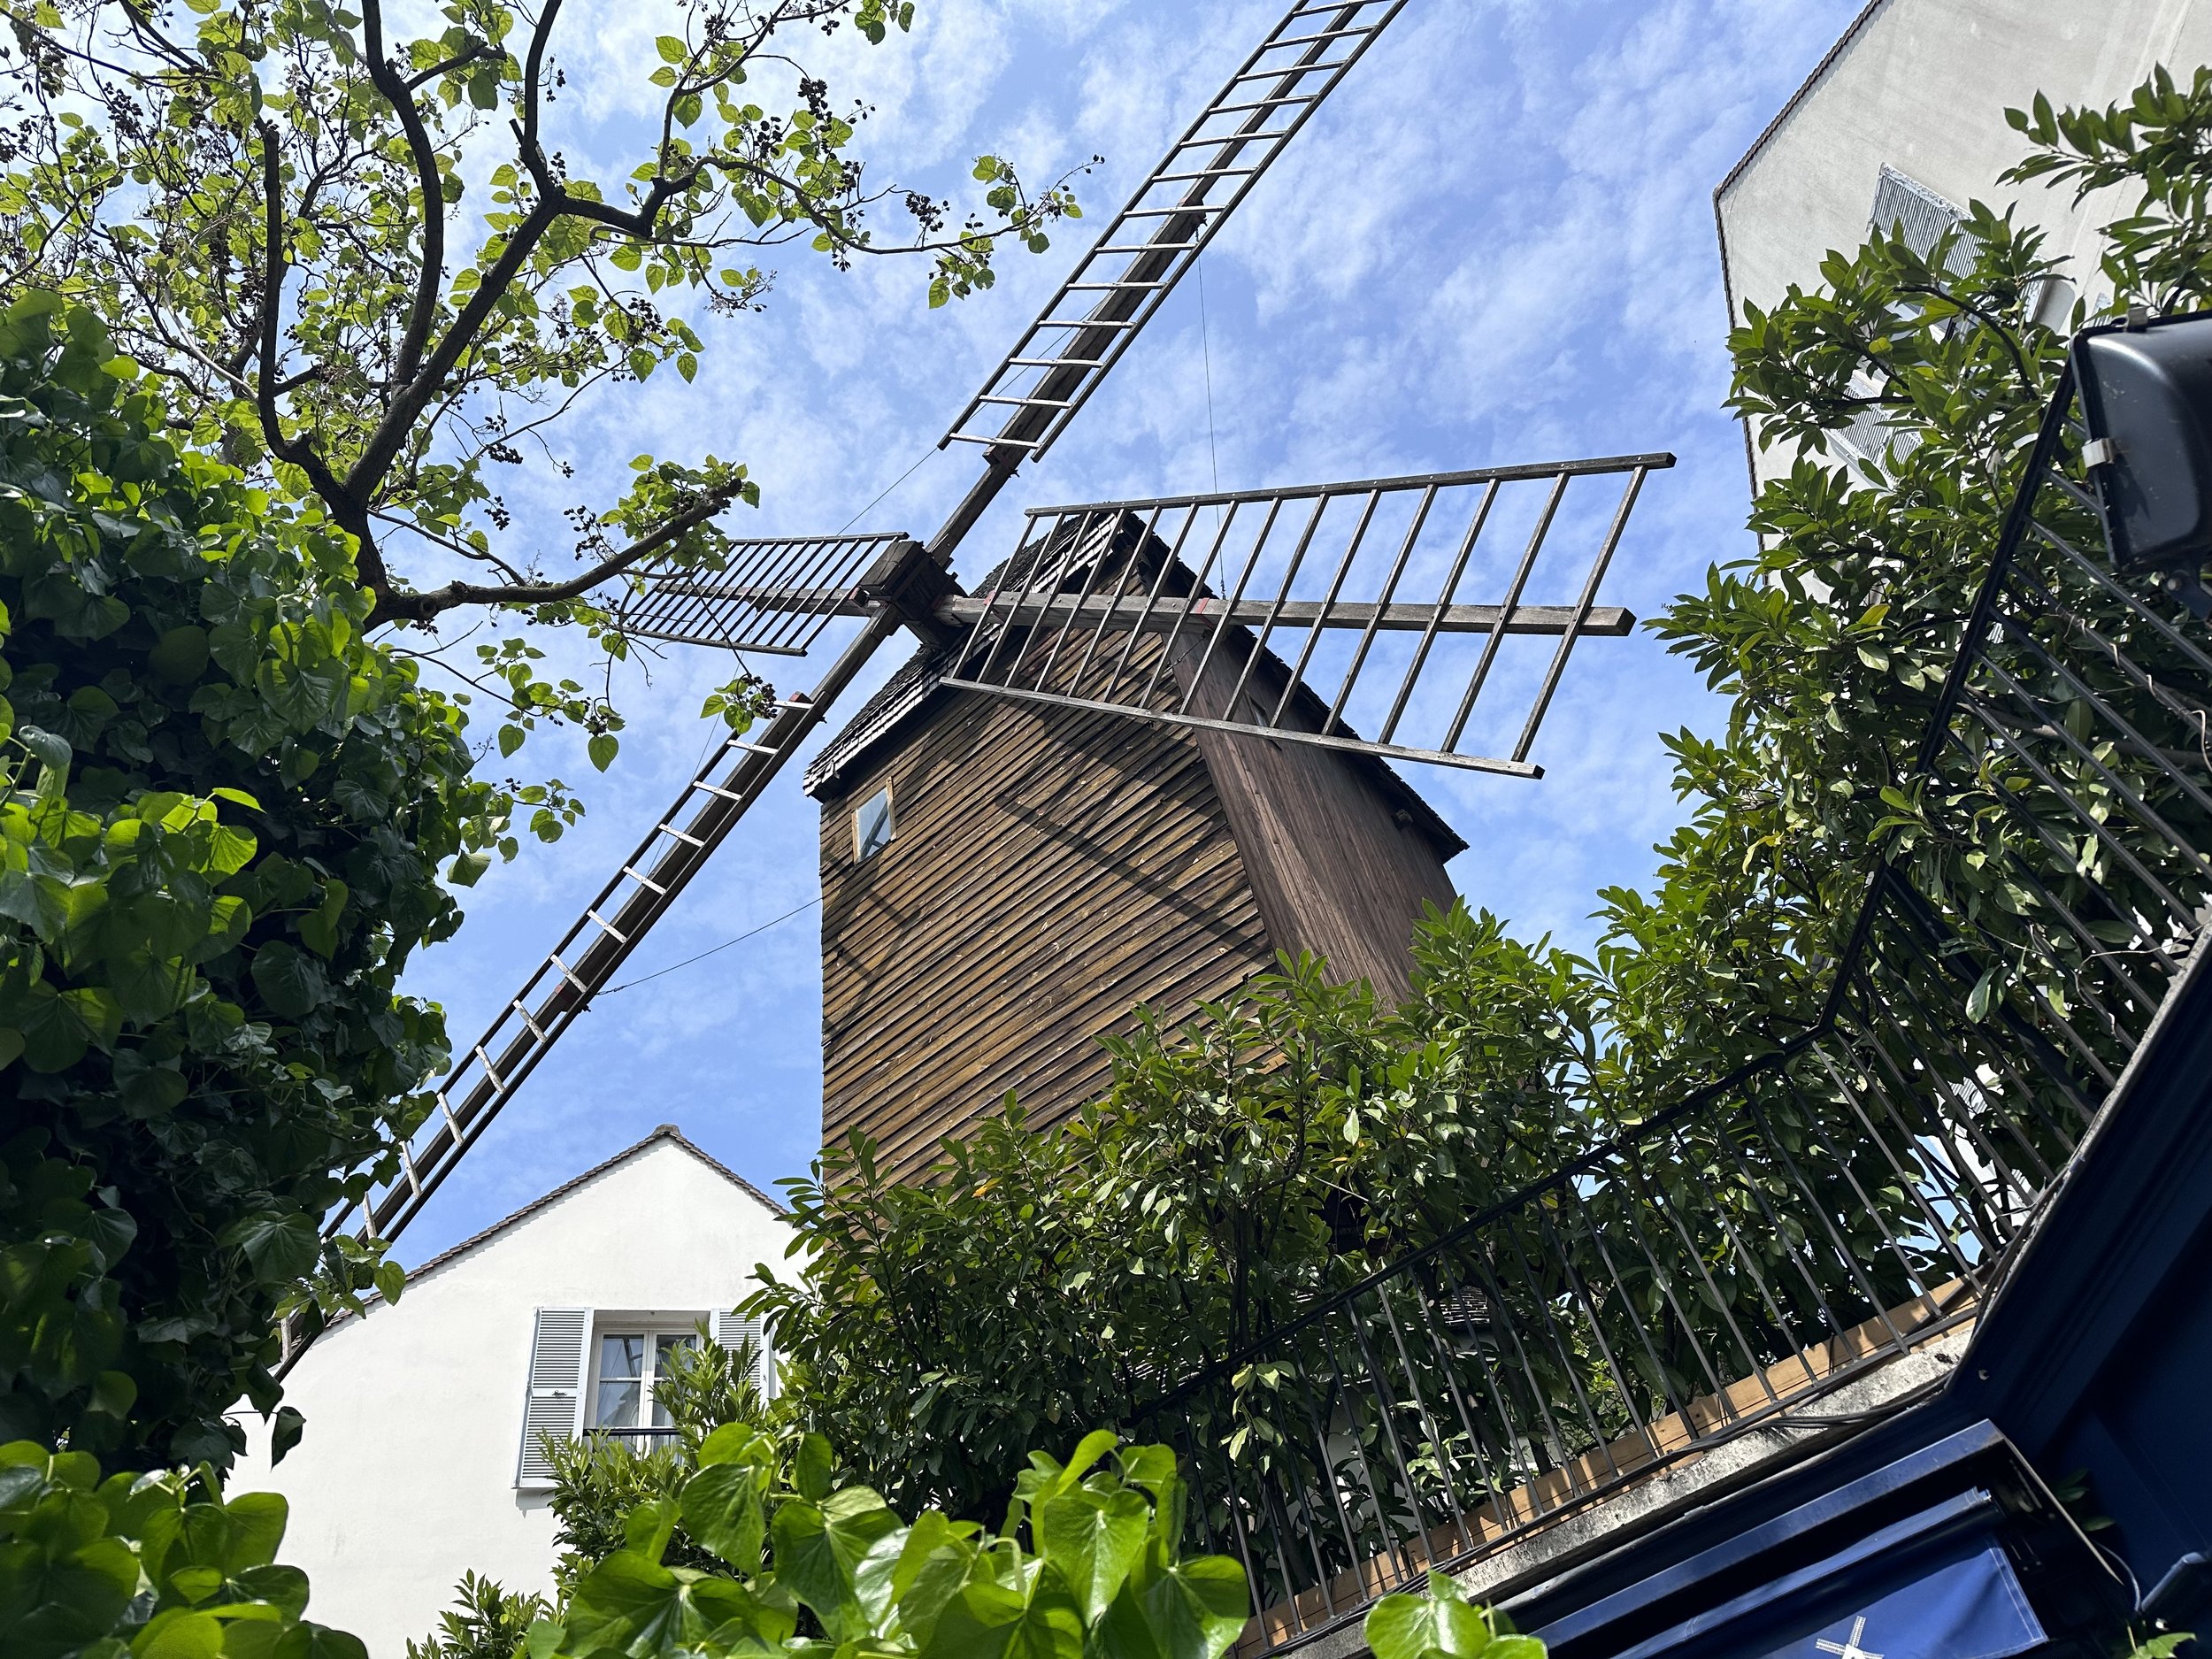 Oldest Windmill in Paris